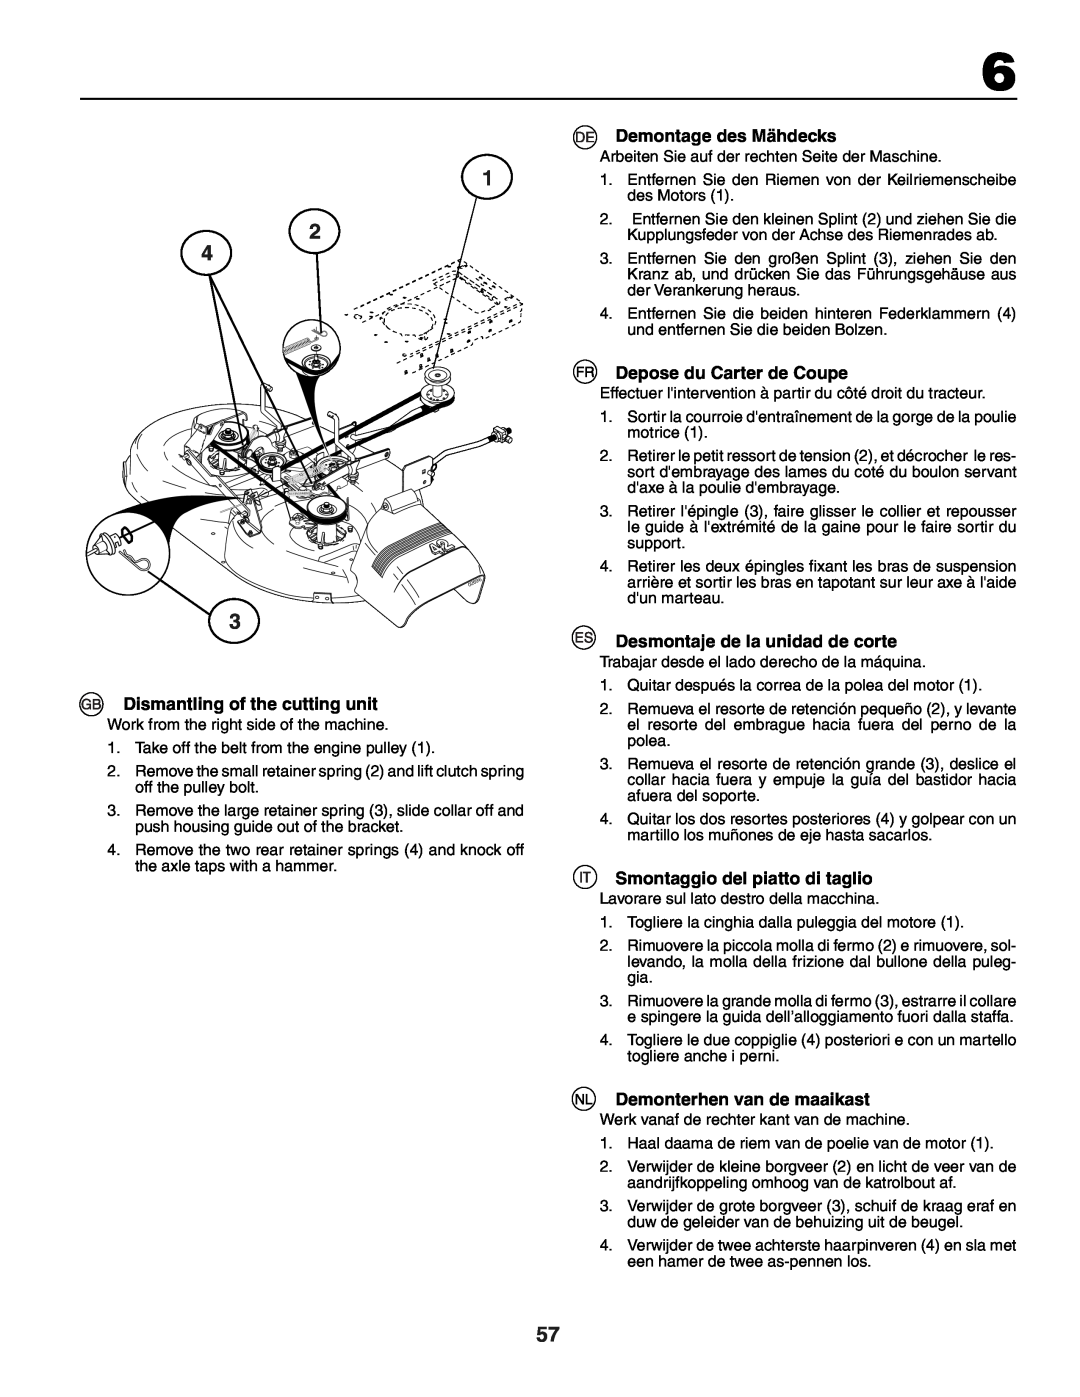 Husqvarna YTH150XP instruction manual Dismantling of the cutting unit, Demontage des Mähdecks, Depose du Carter de Coupe 